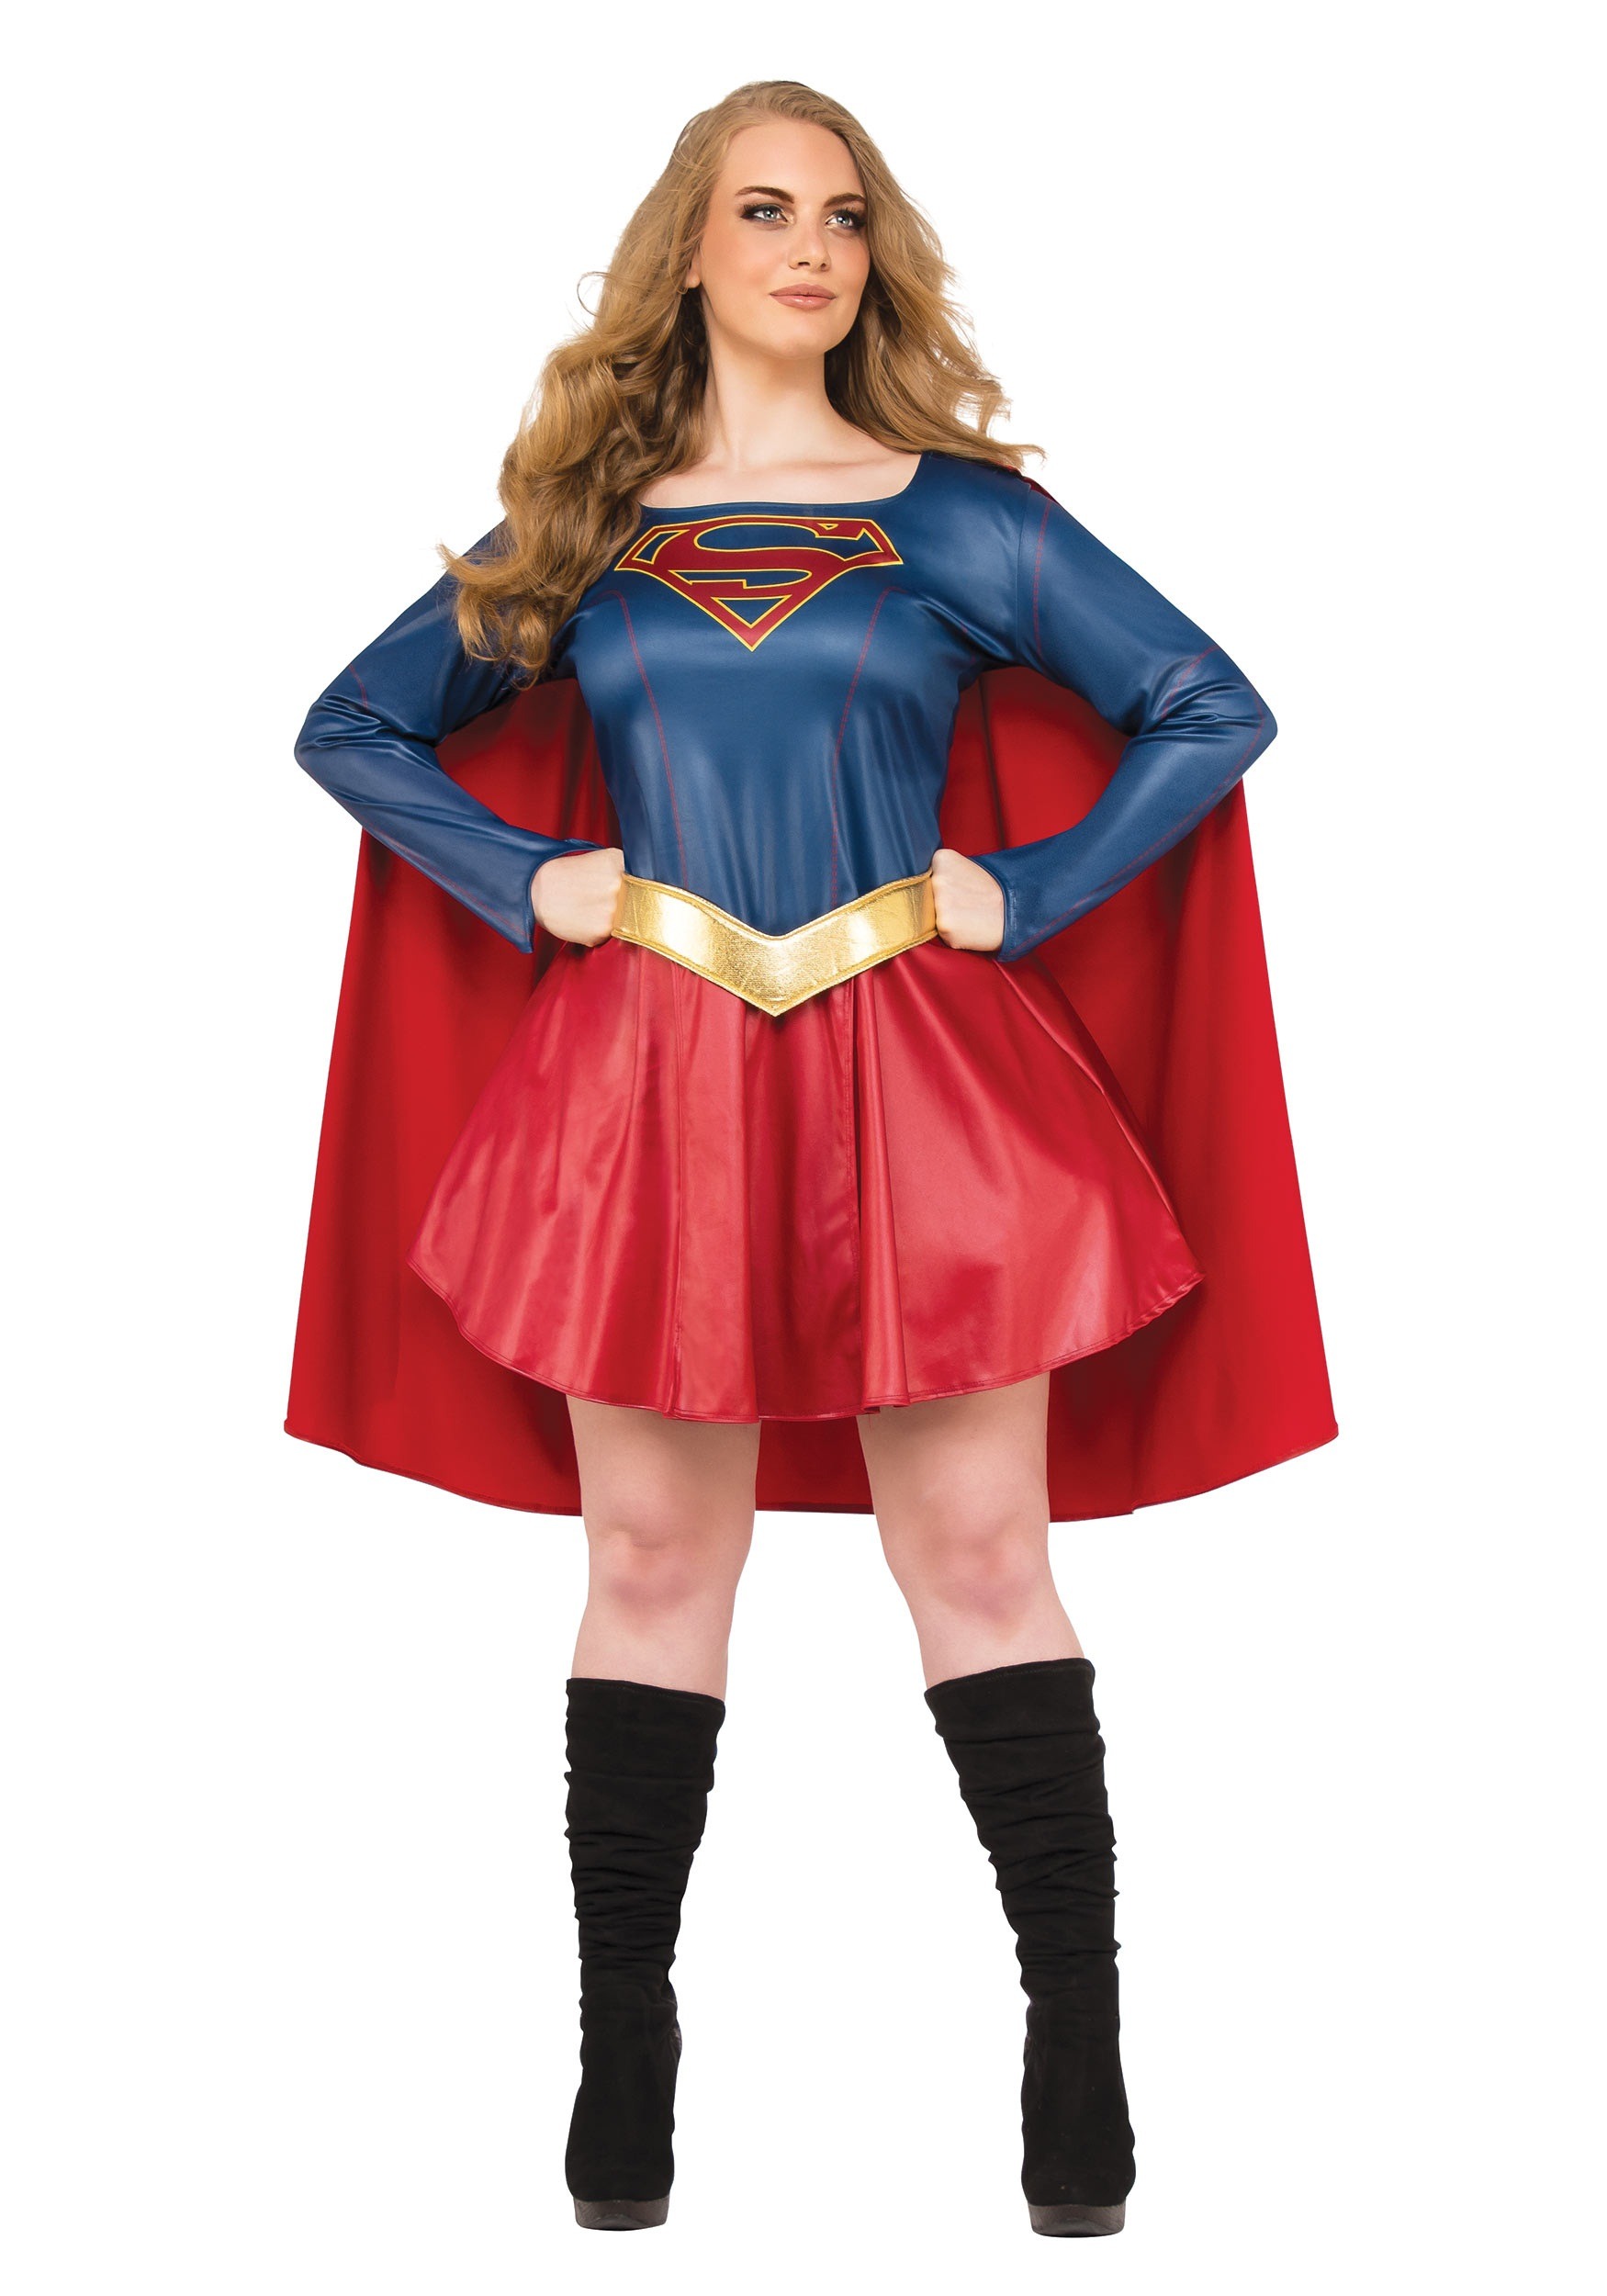 Plus Size Supergirl TV Costume for Women